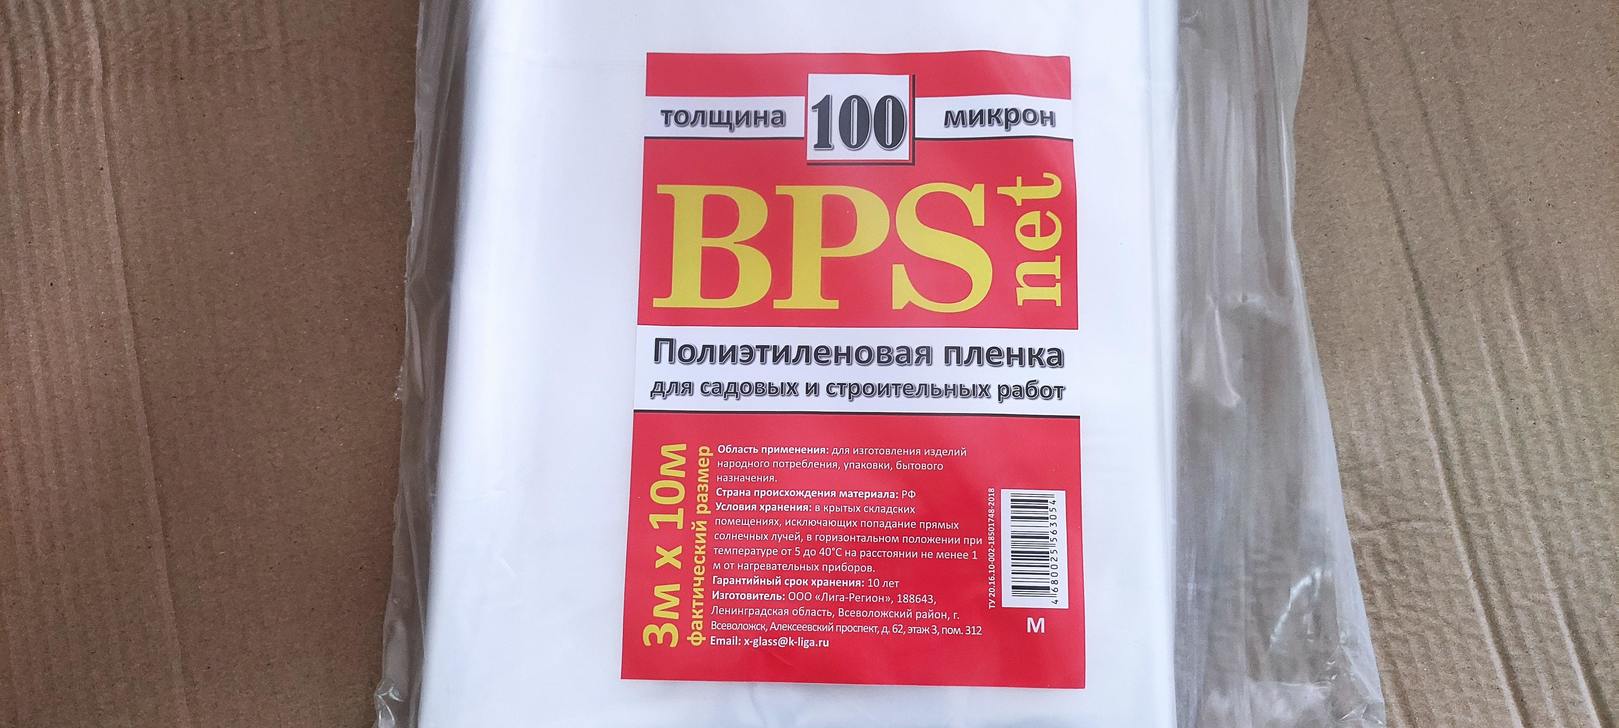 Пленка полиэтиленовая нарезка BPS 3м х10м 100 мкм